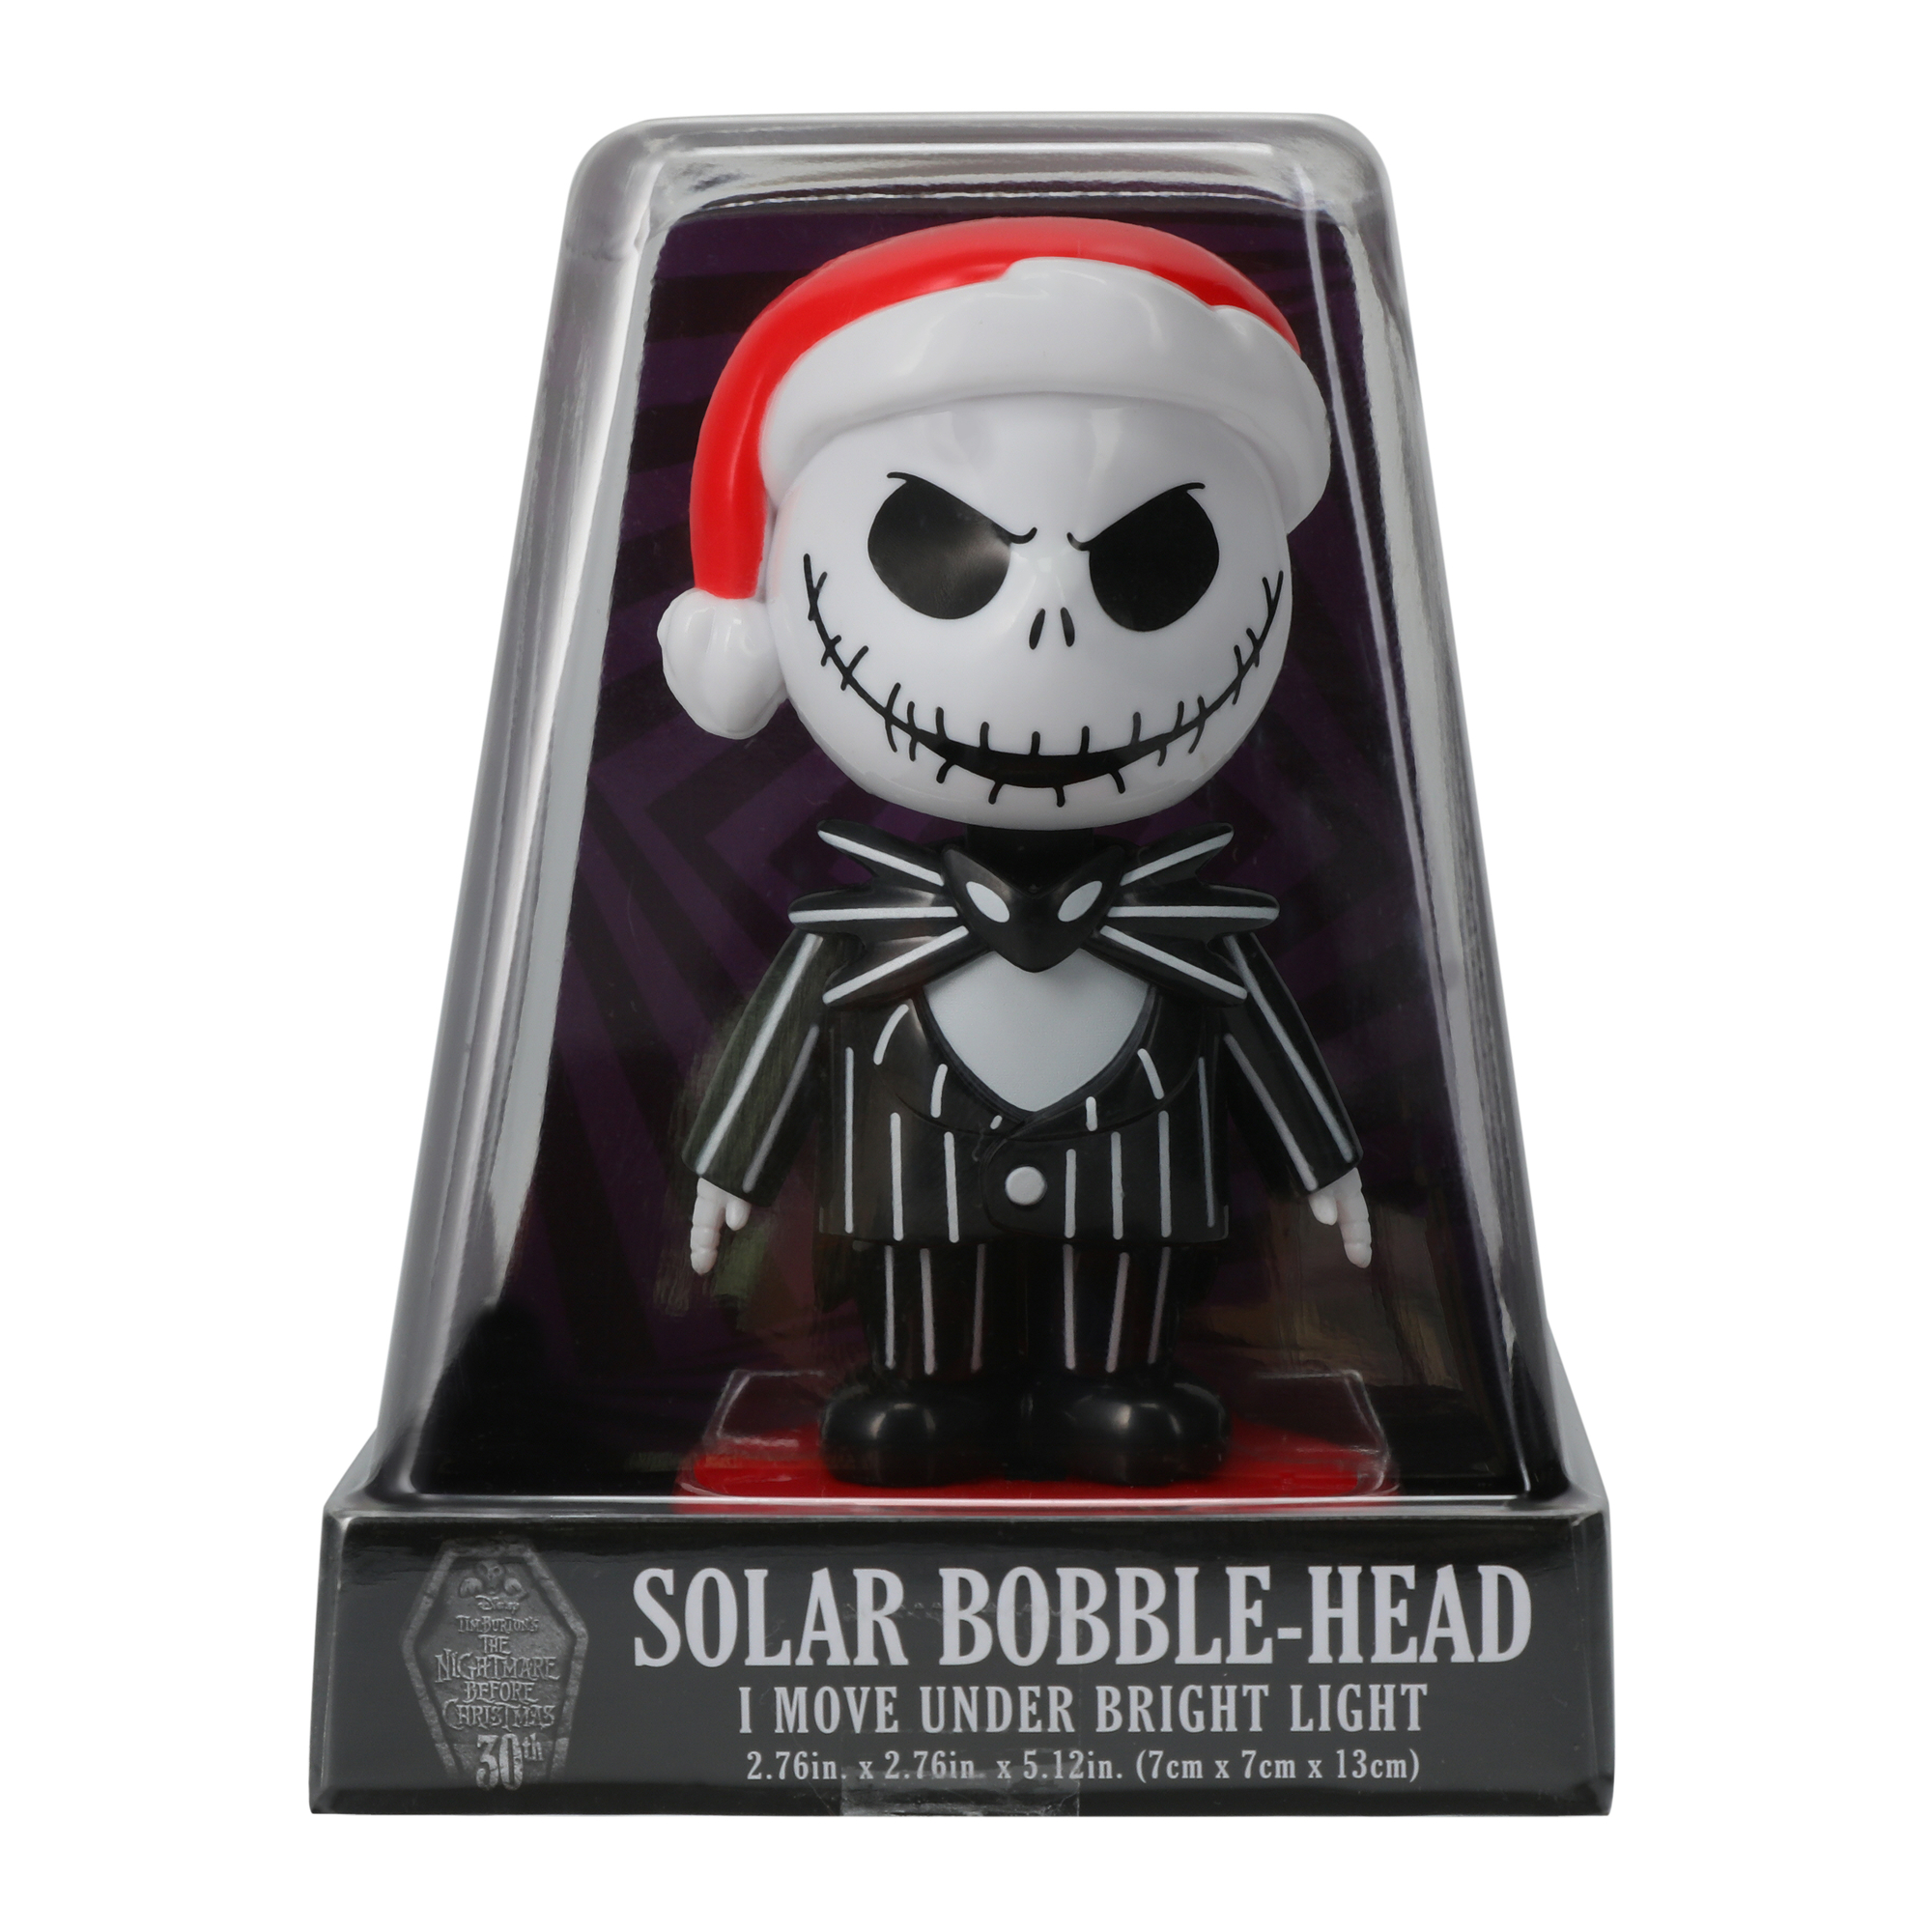 Nightmare Before Christmas solar bobble-head